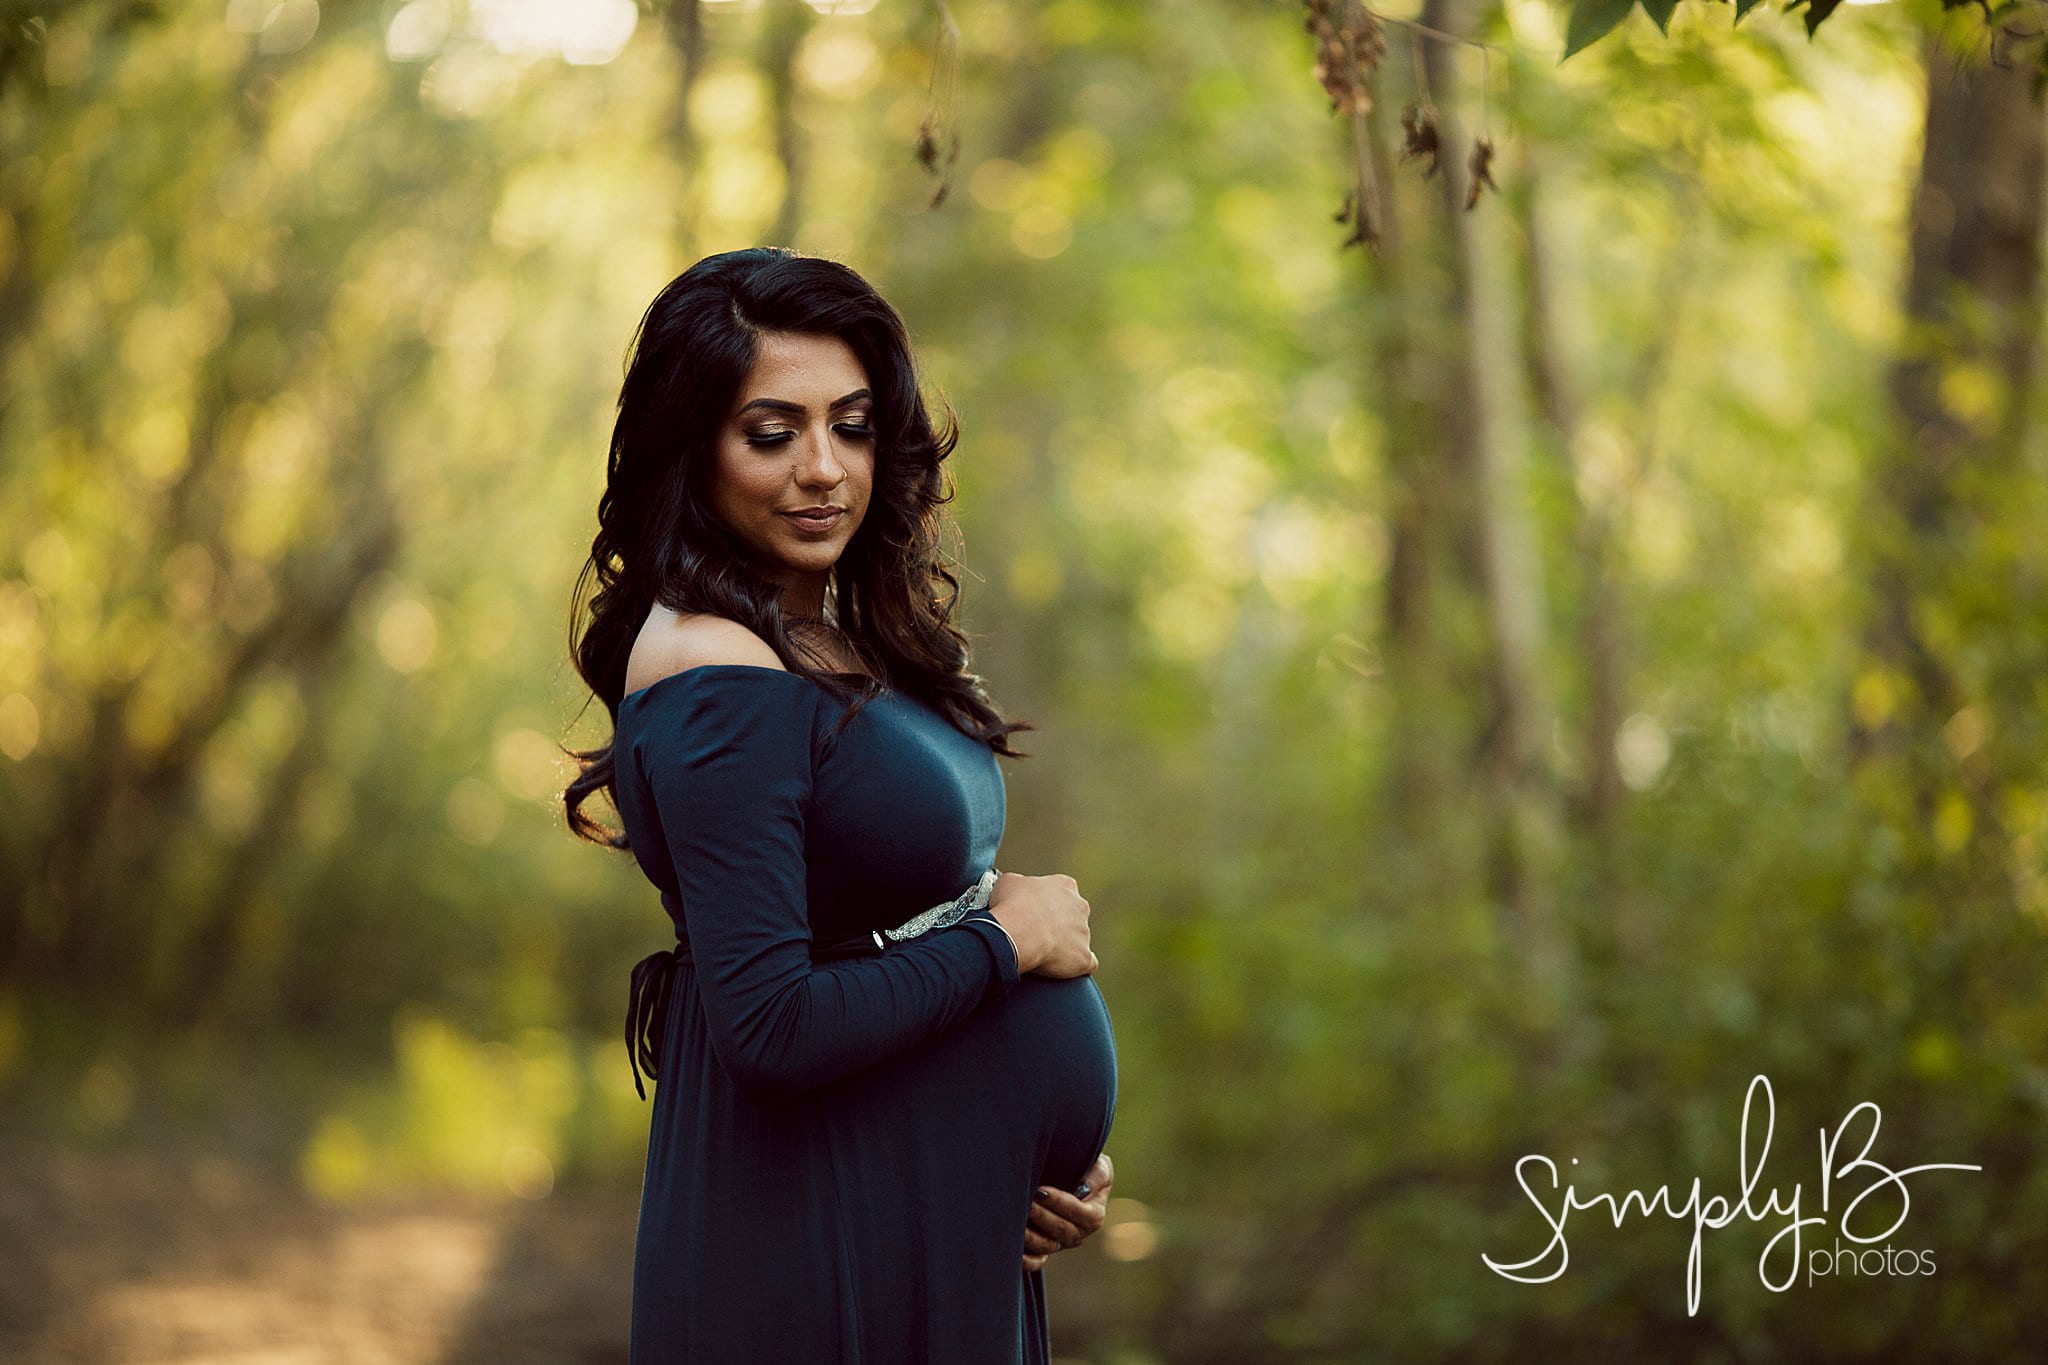 Edmonton maternity photographer fall outdoors session